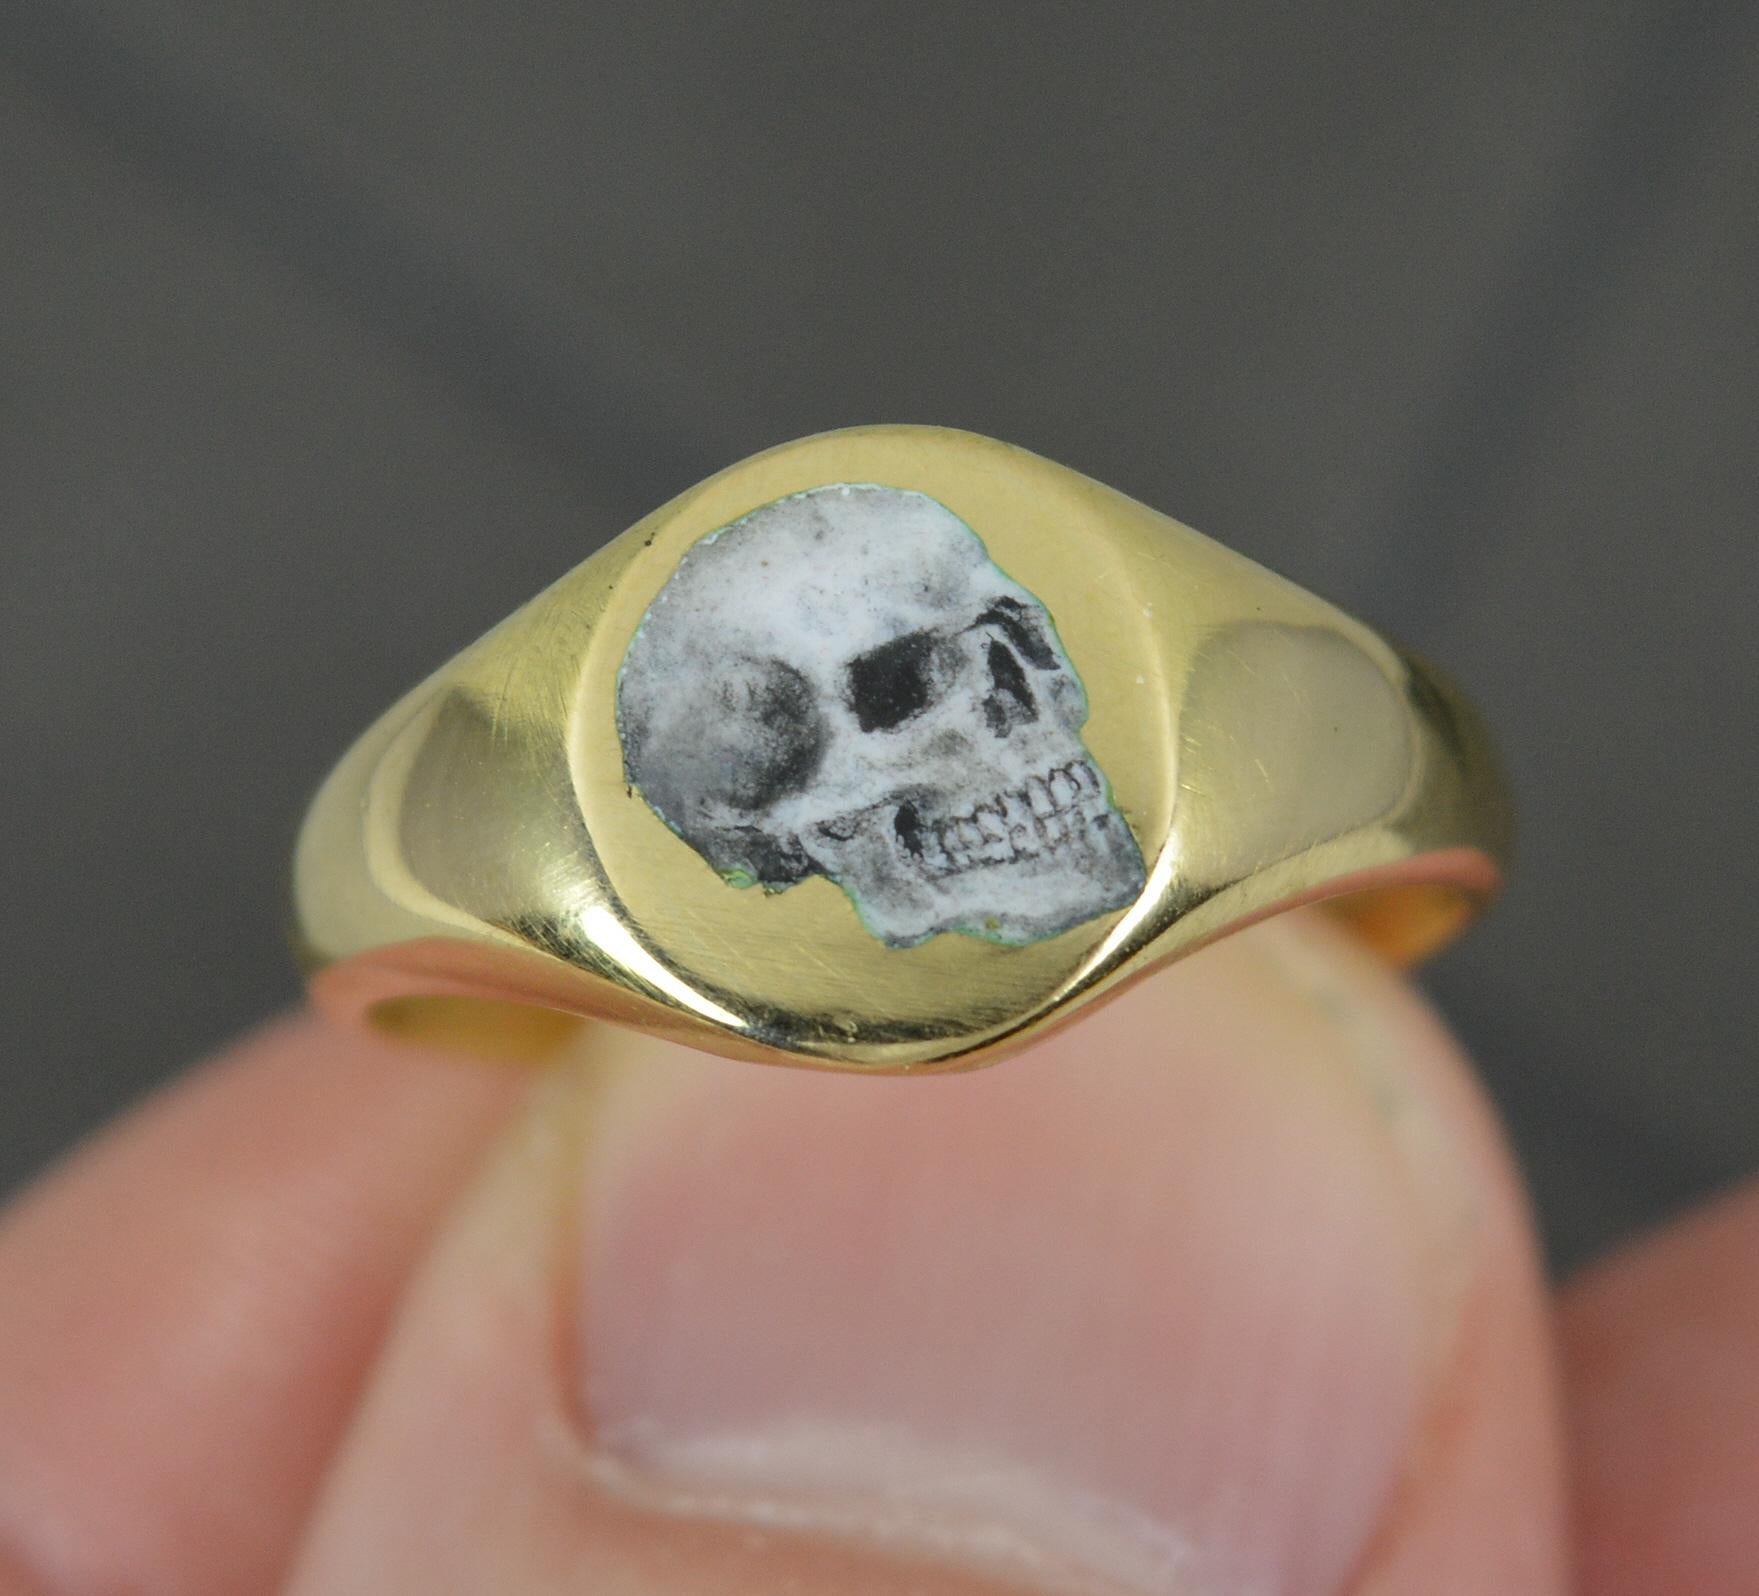 Impressive 18 Carat Gold and Enamel Skull Signet Ring 1